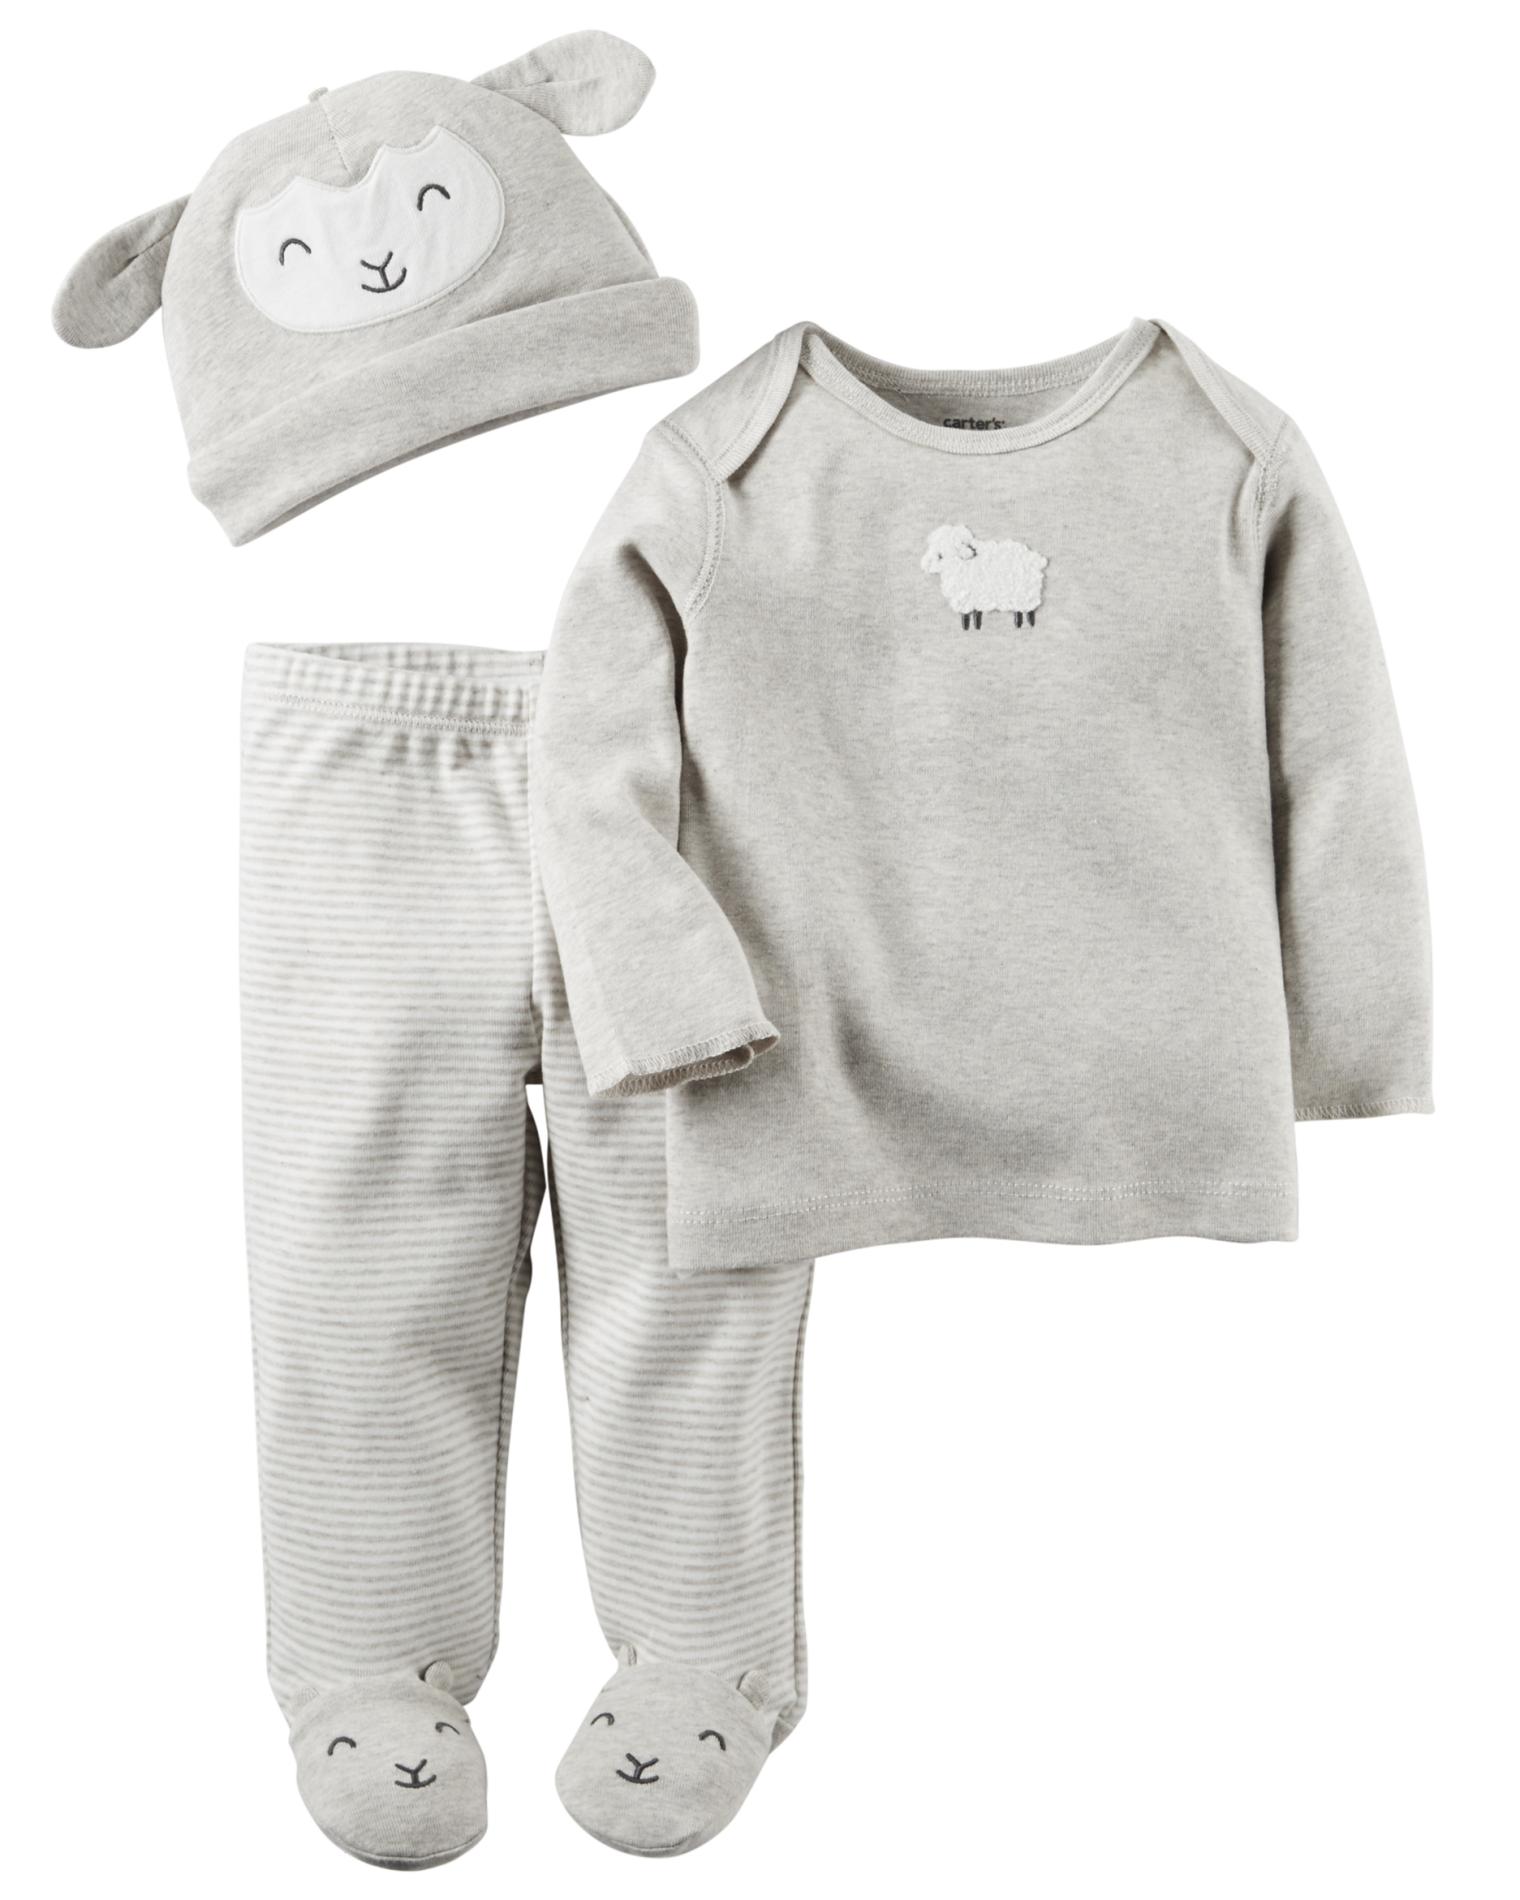 Carter's Newborns' Cap, Shirt & Footed Pants - Lamb